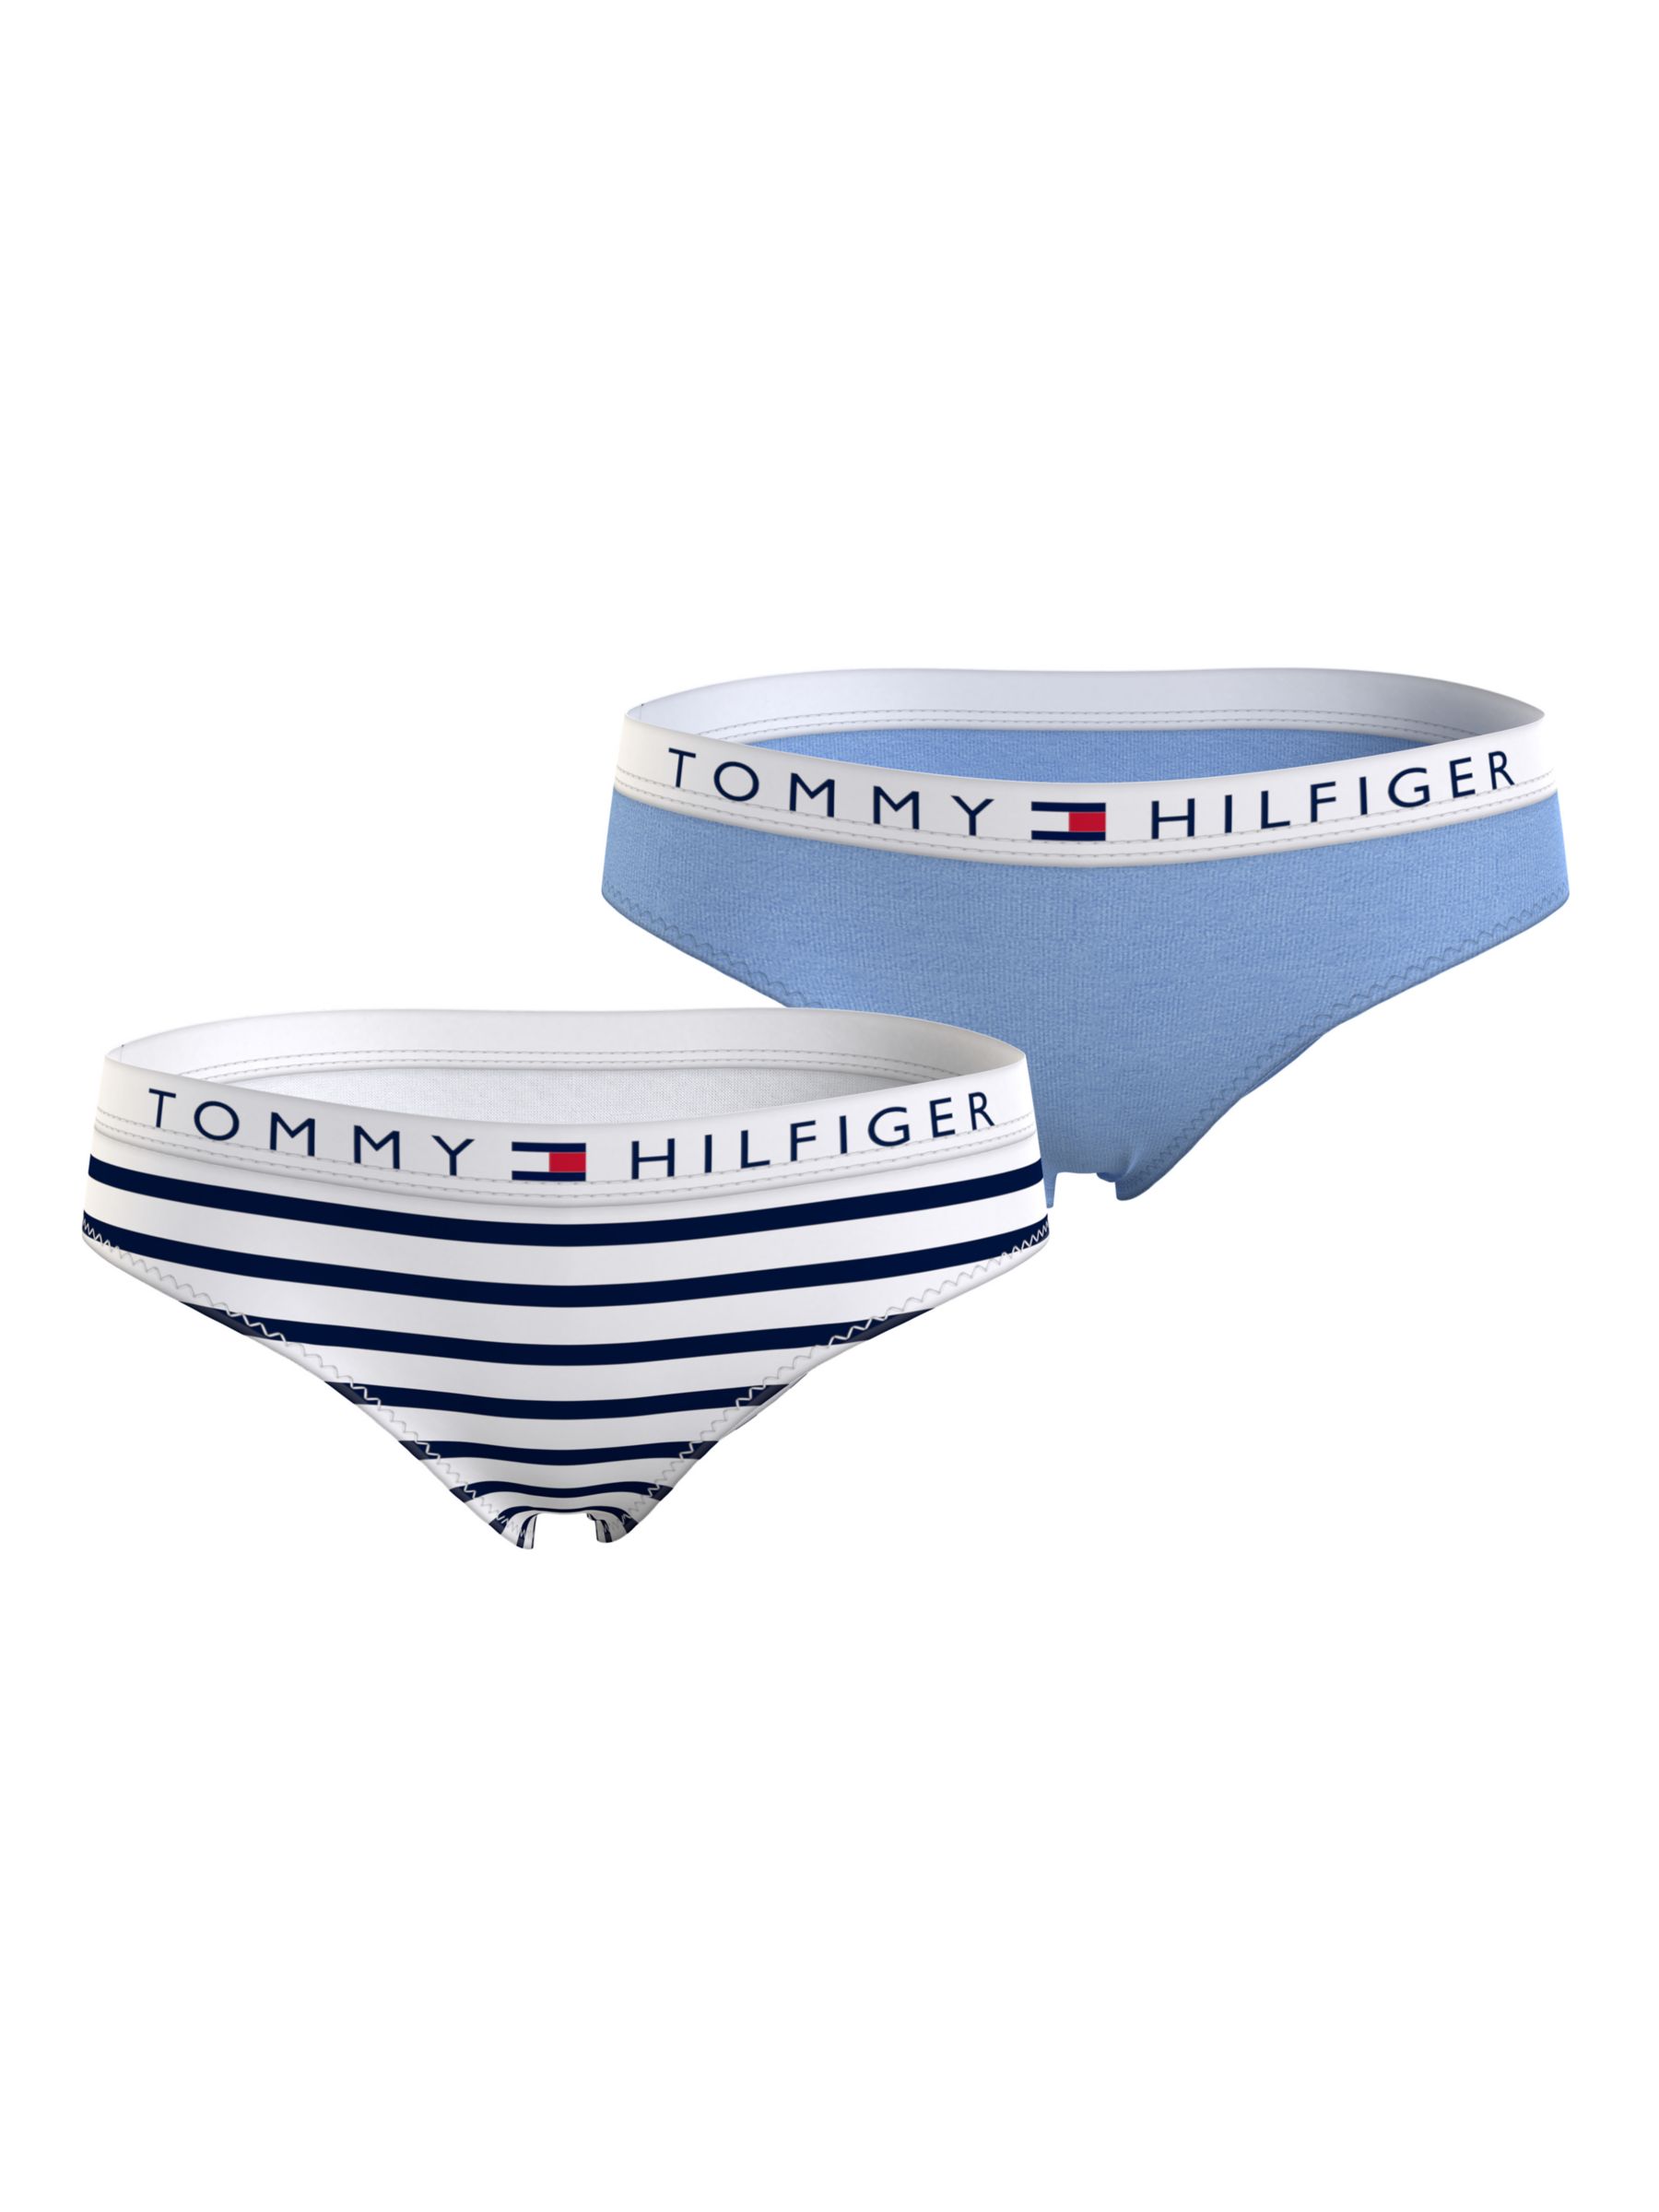 TOMMY HILFIGER underpants 2P BIKINI White for girls